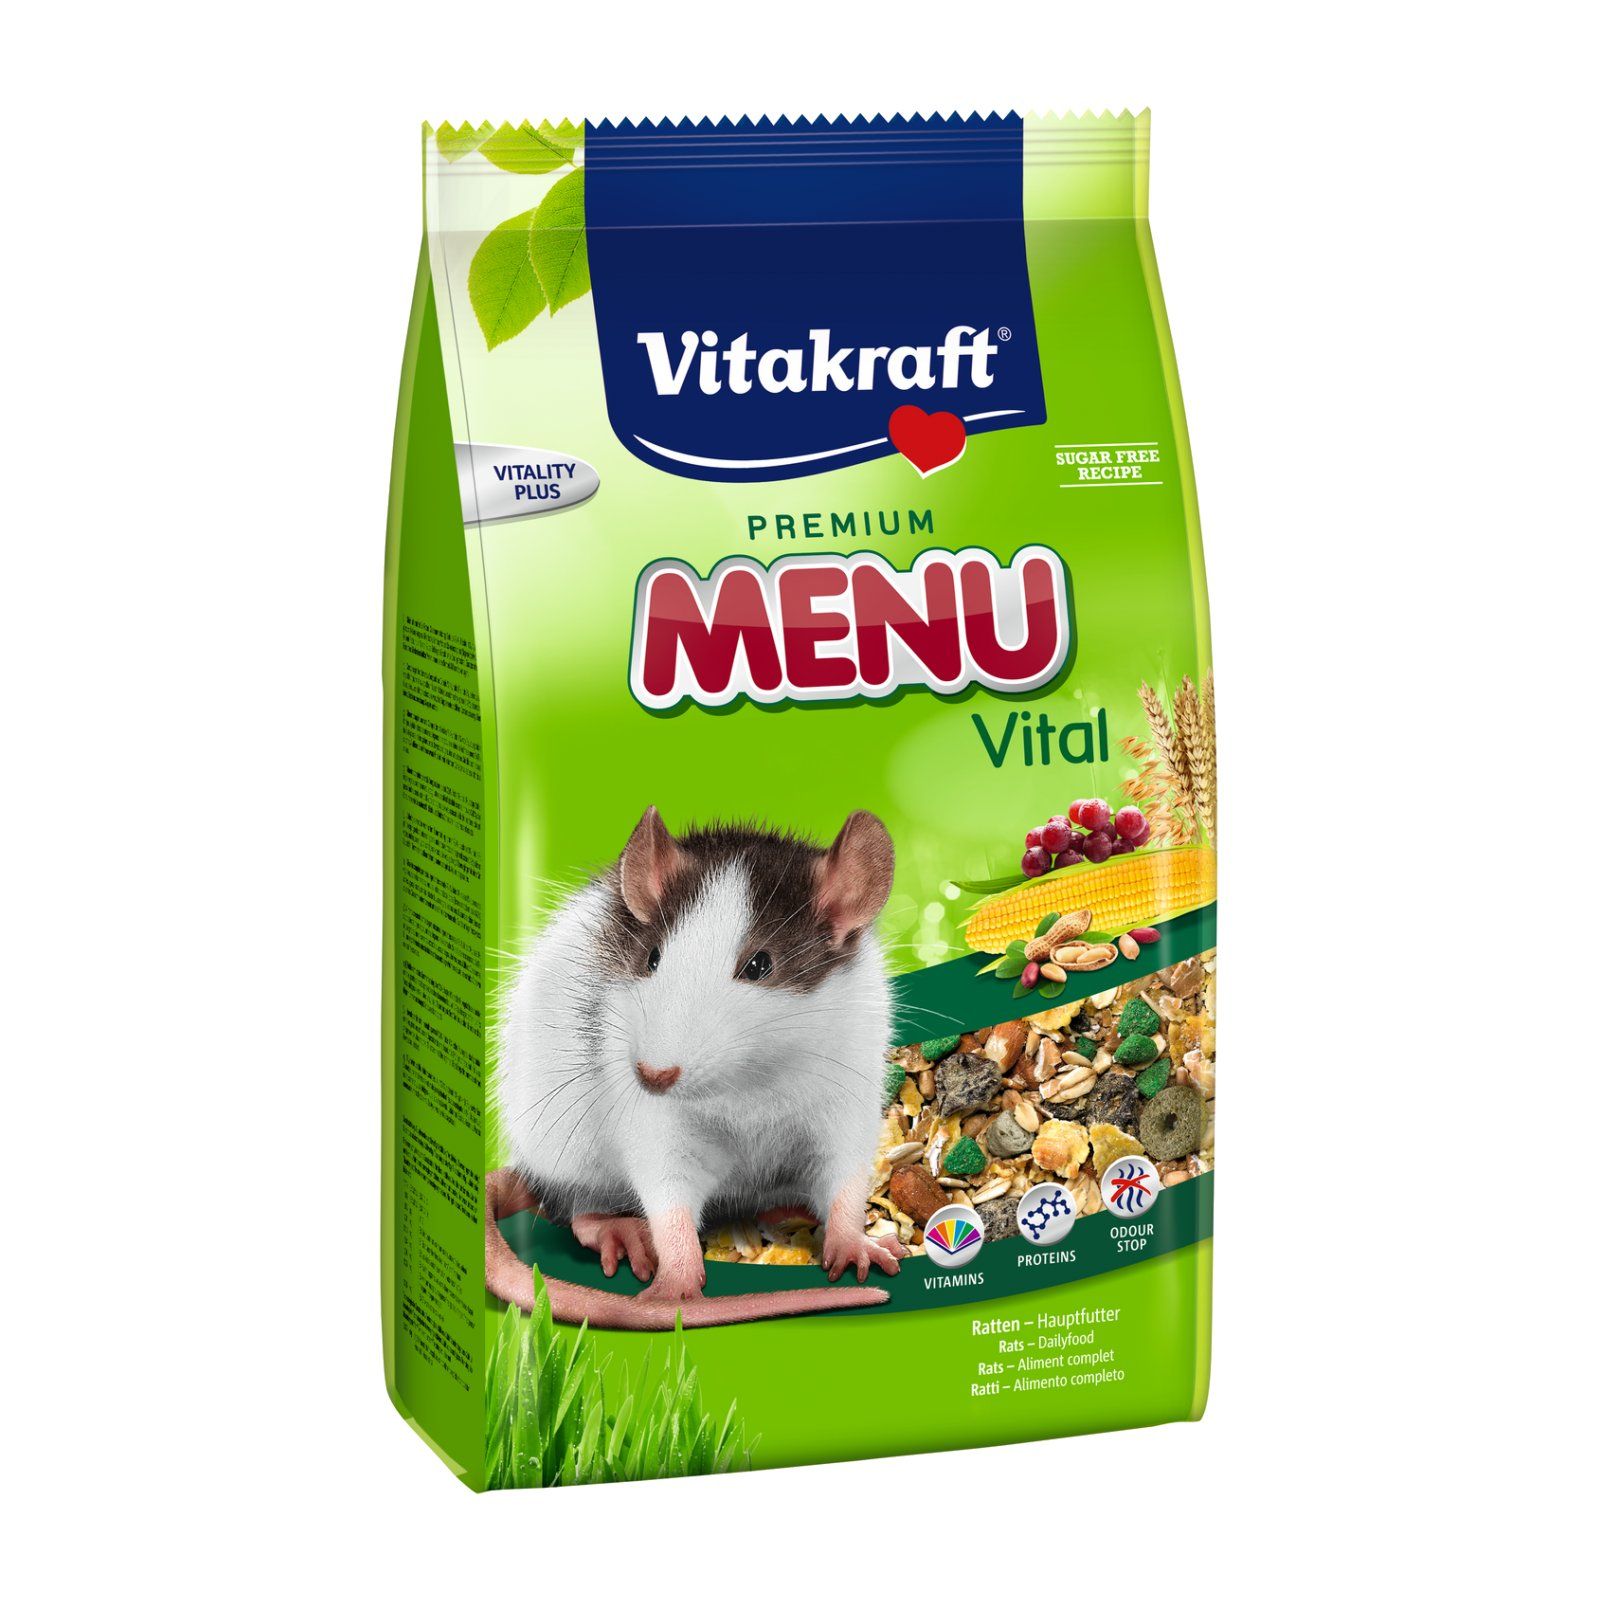 Vitakraft Premium Menü Vital für Ratten